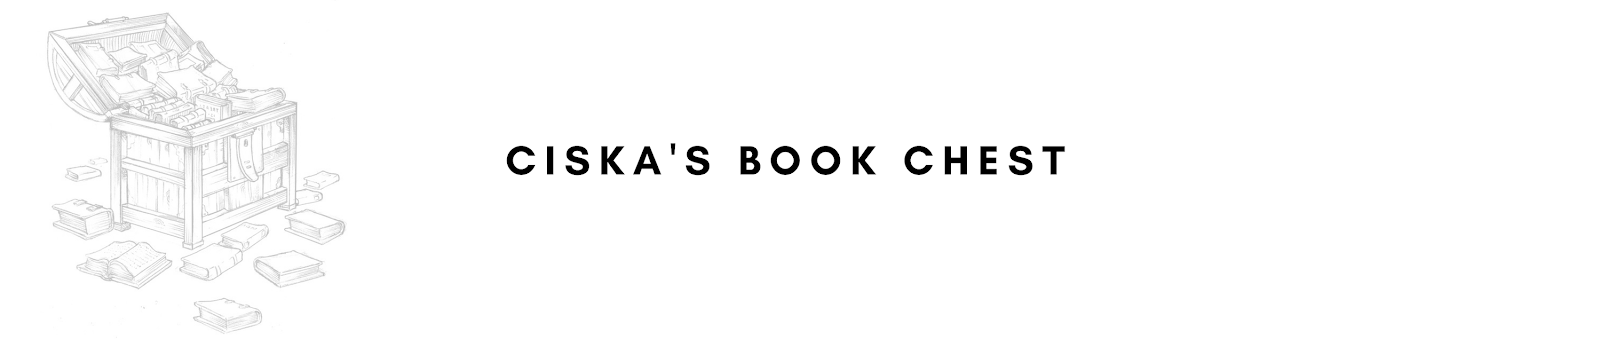 Ciska's Book Chest